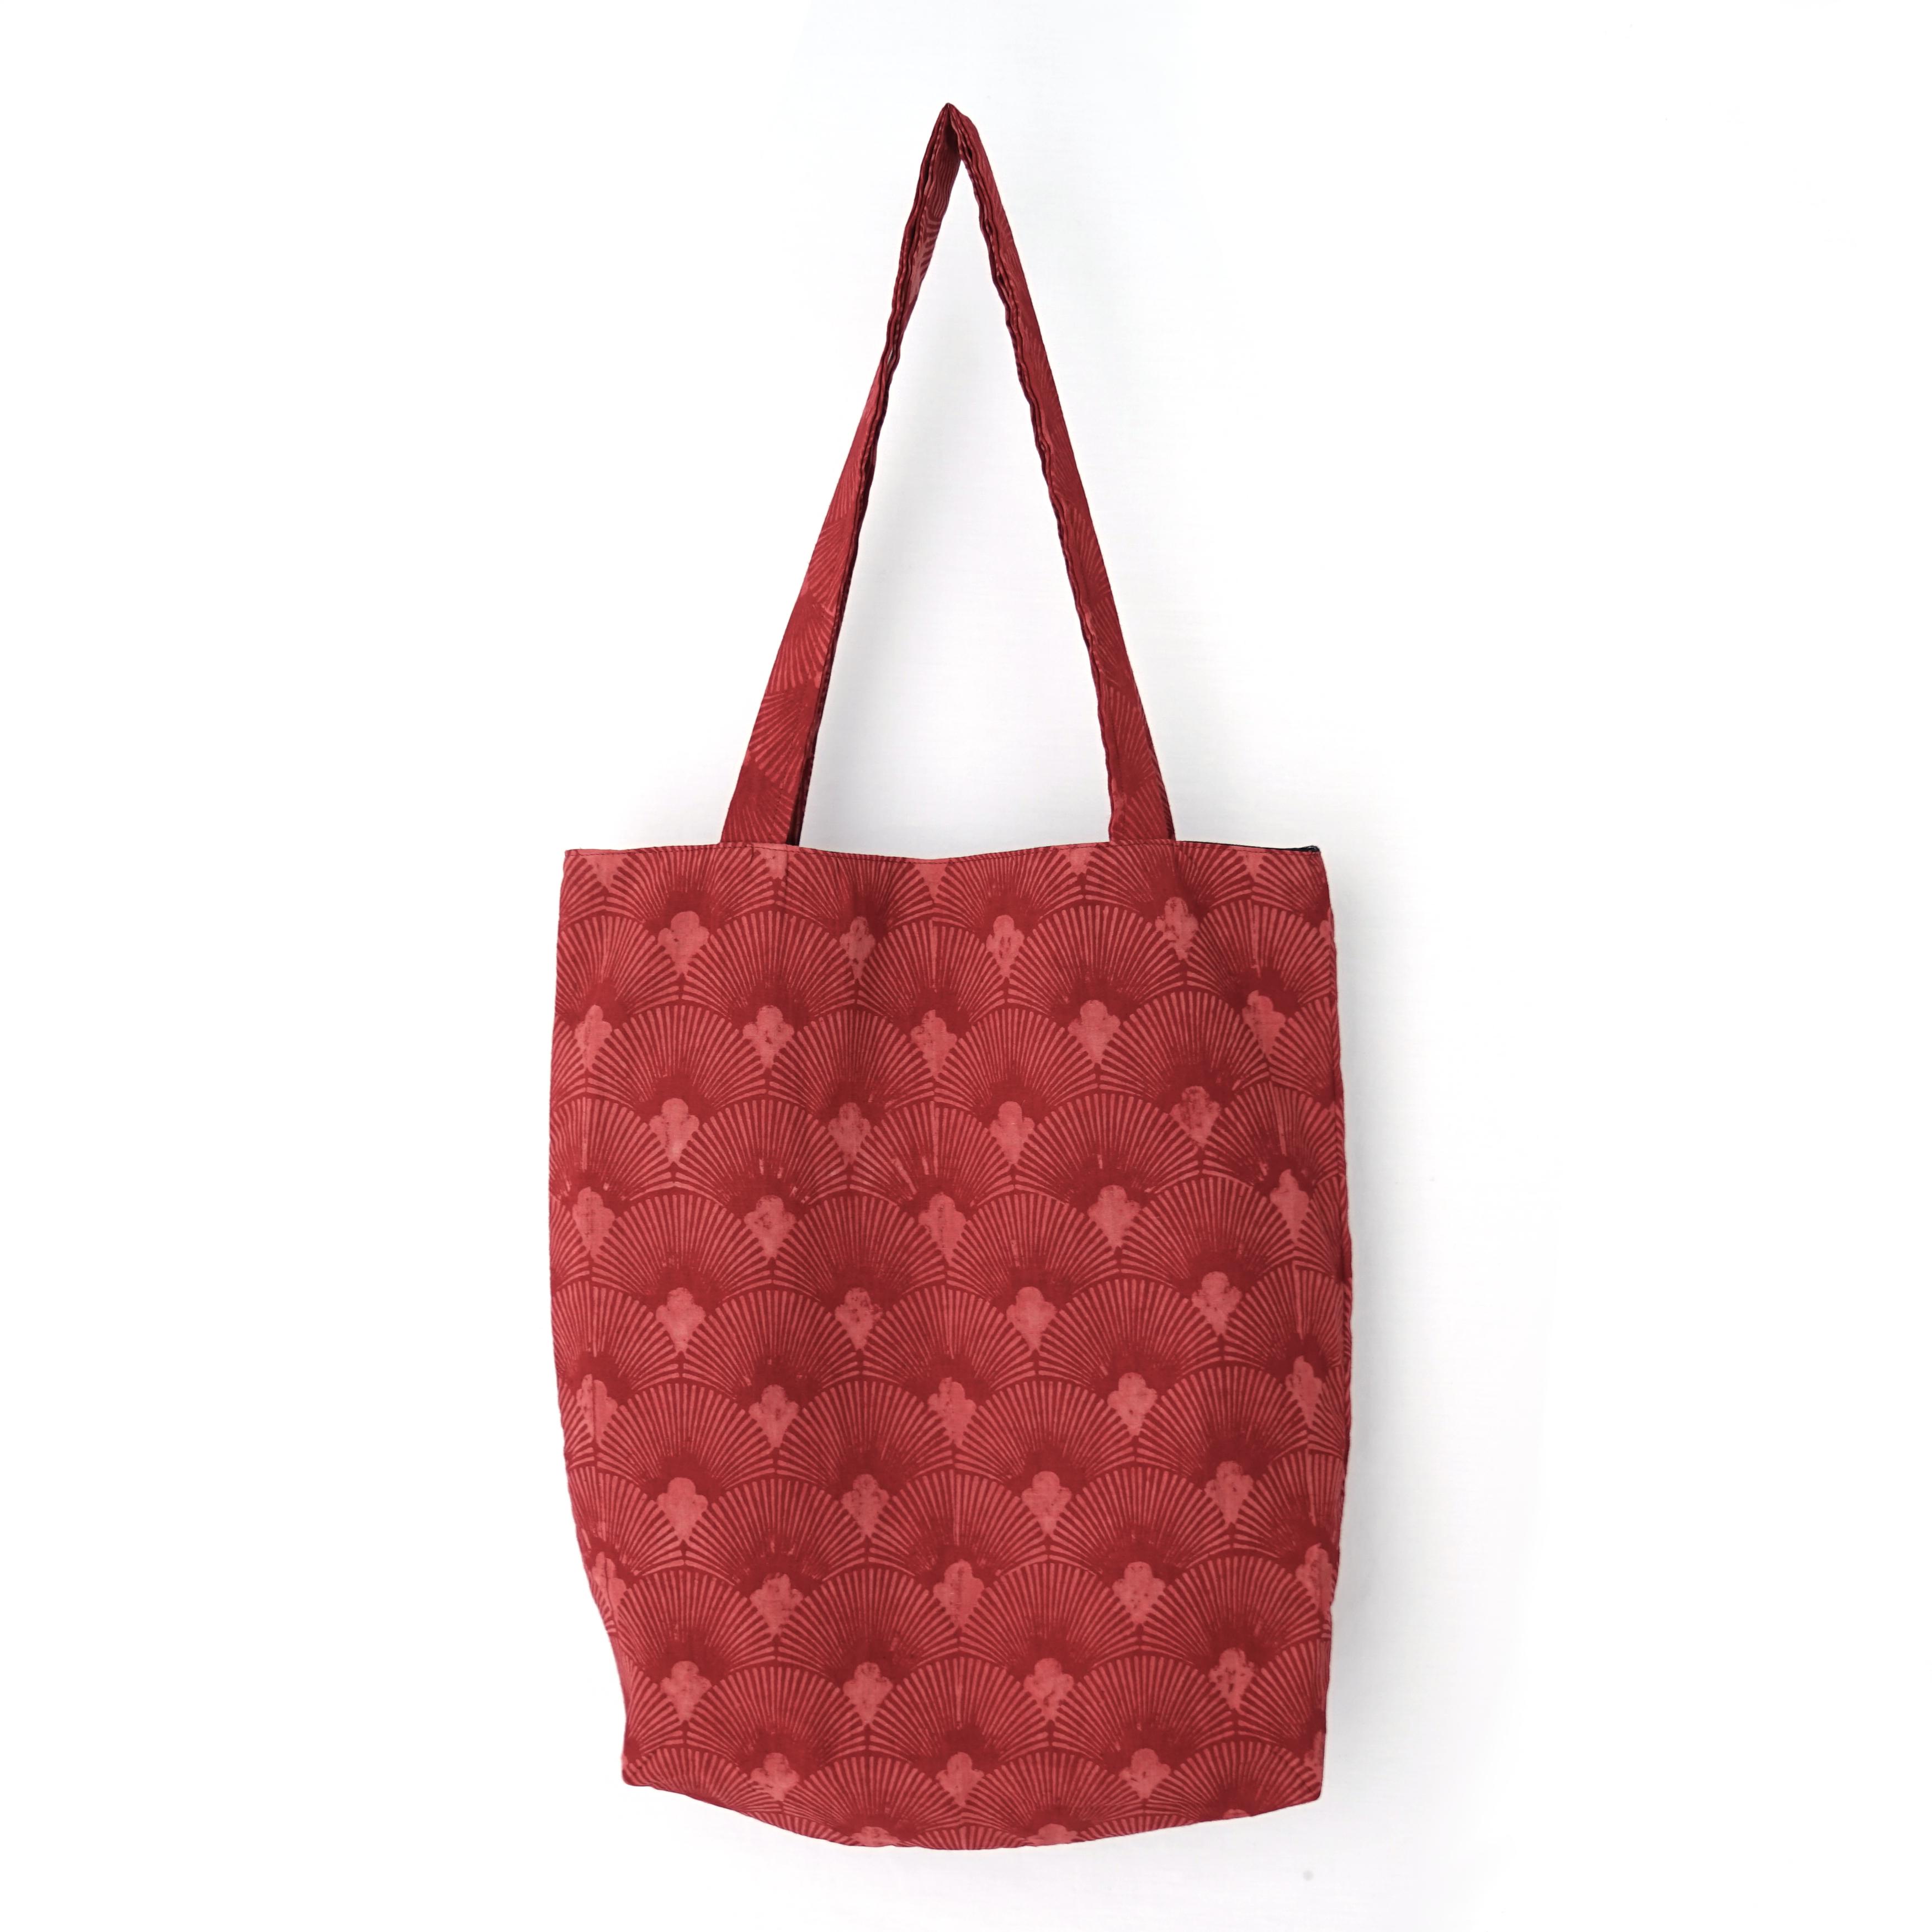 1 - TB021 - Block-Printed Tote Bag - Alizarin Red Dye - Shell Design - Closed